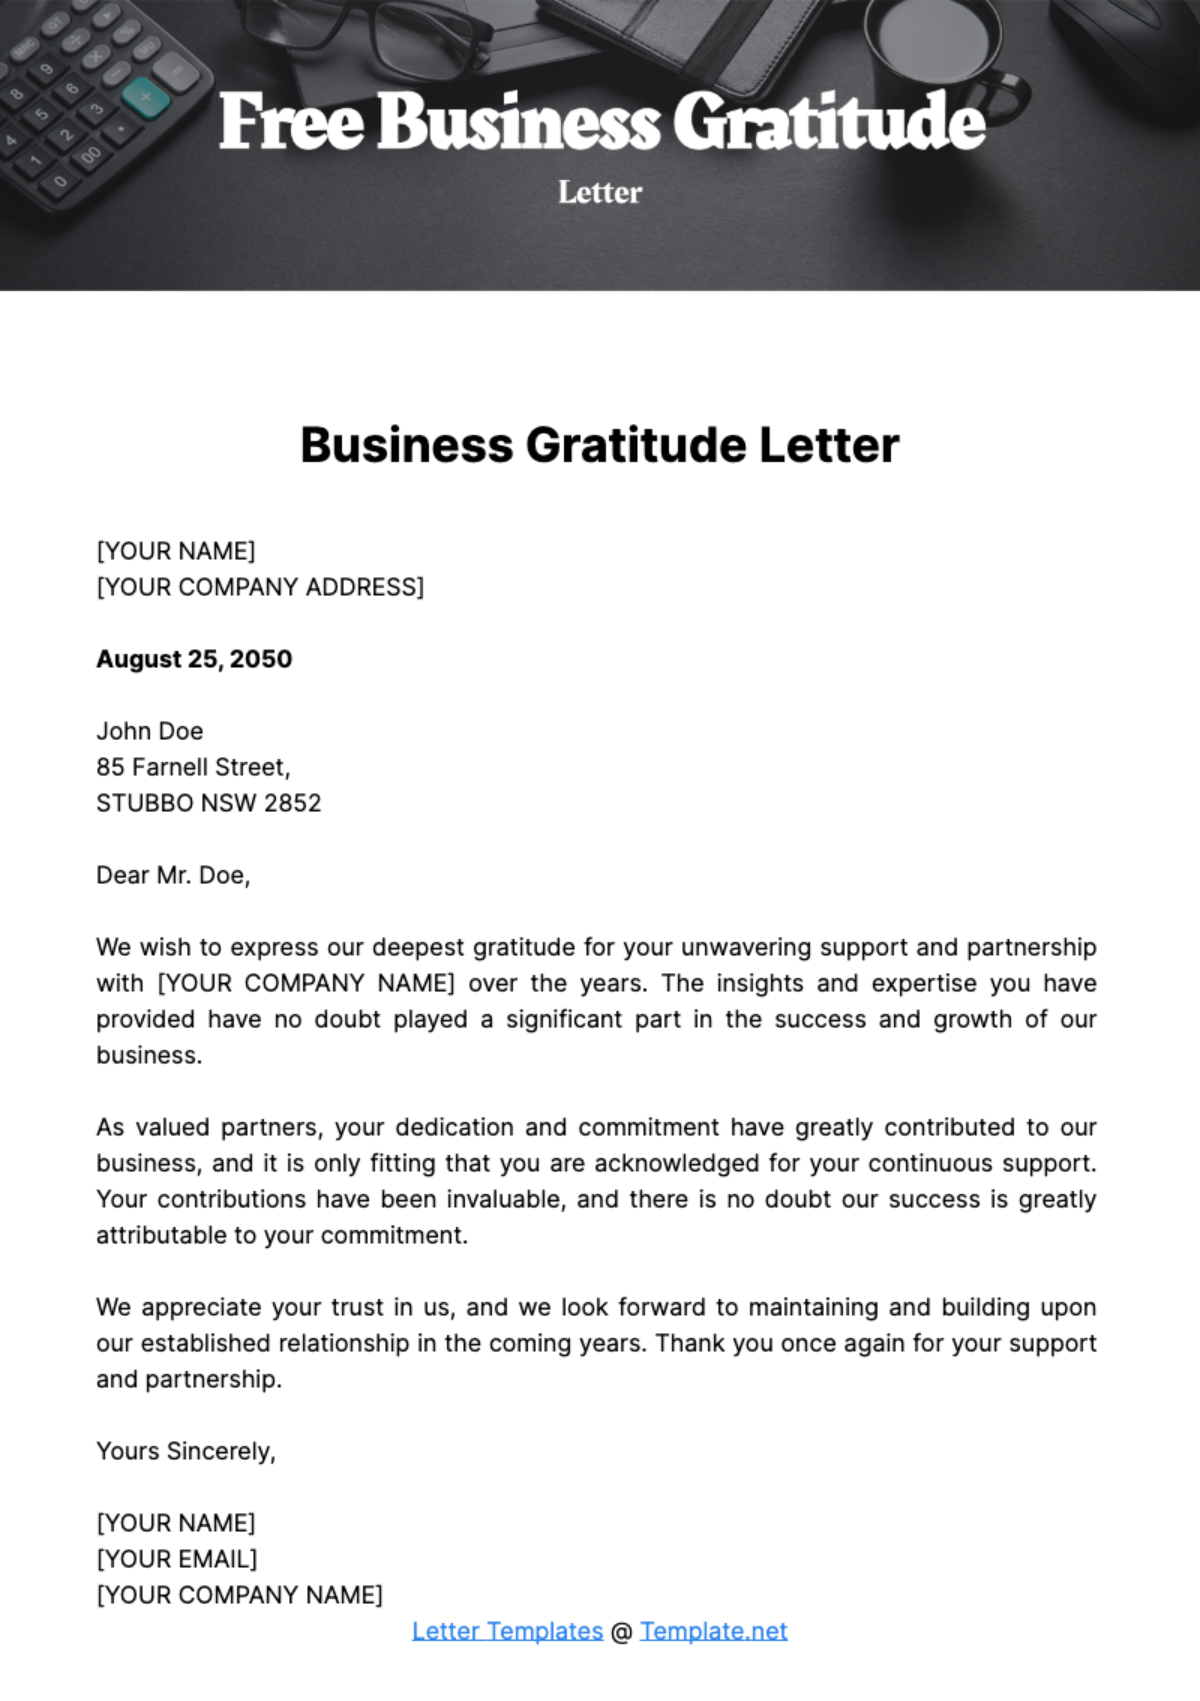 Business Gratitude Letter Template